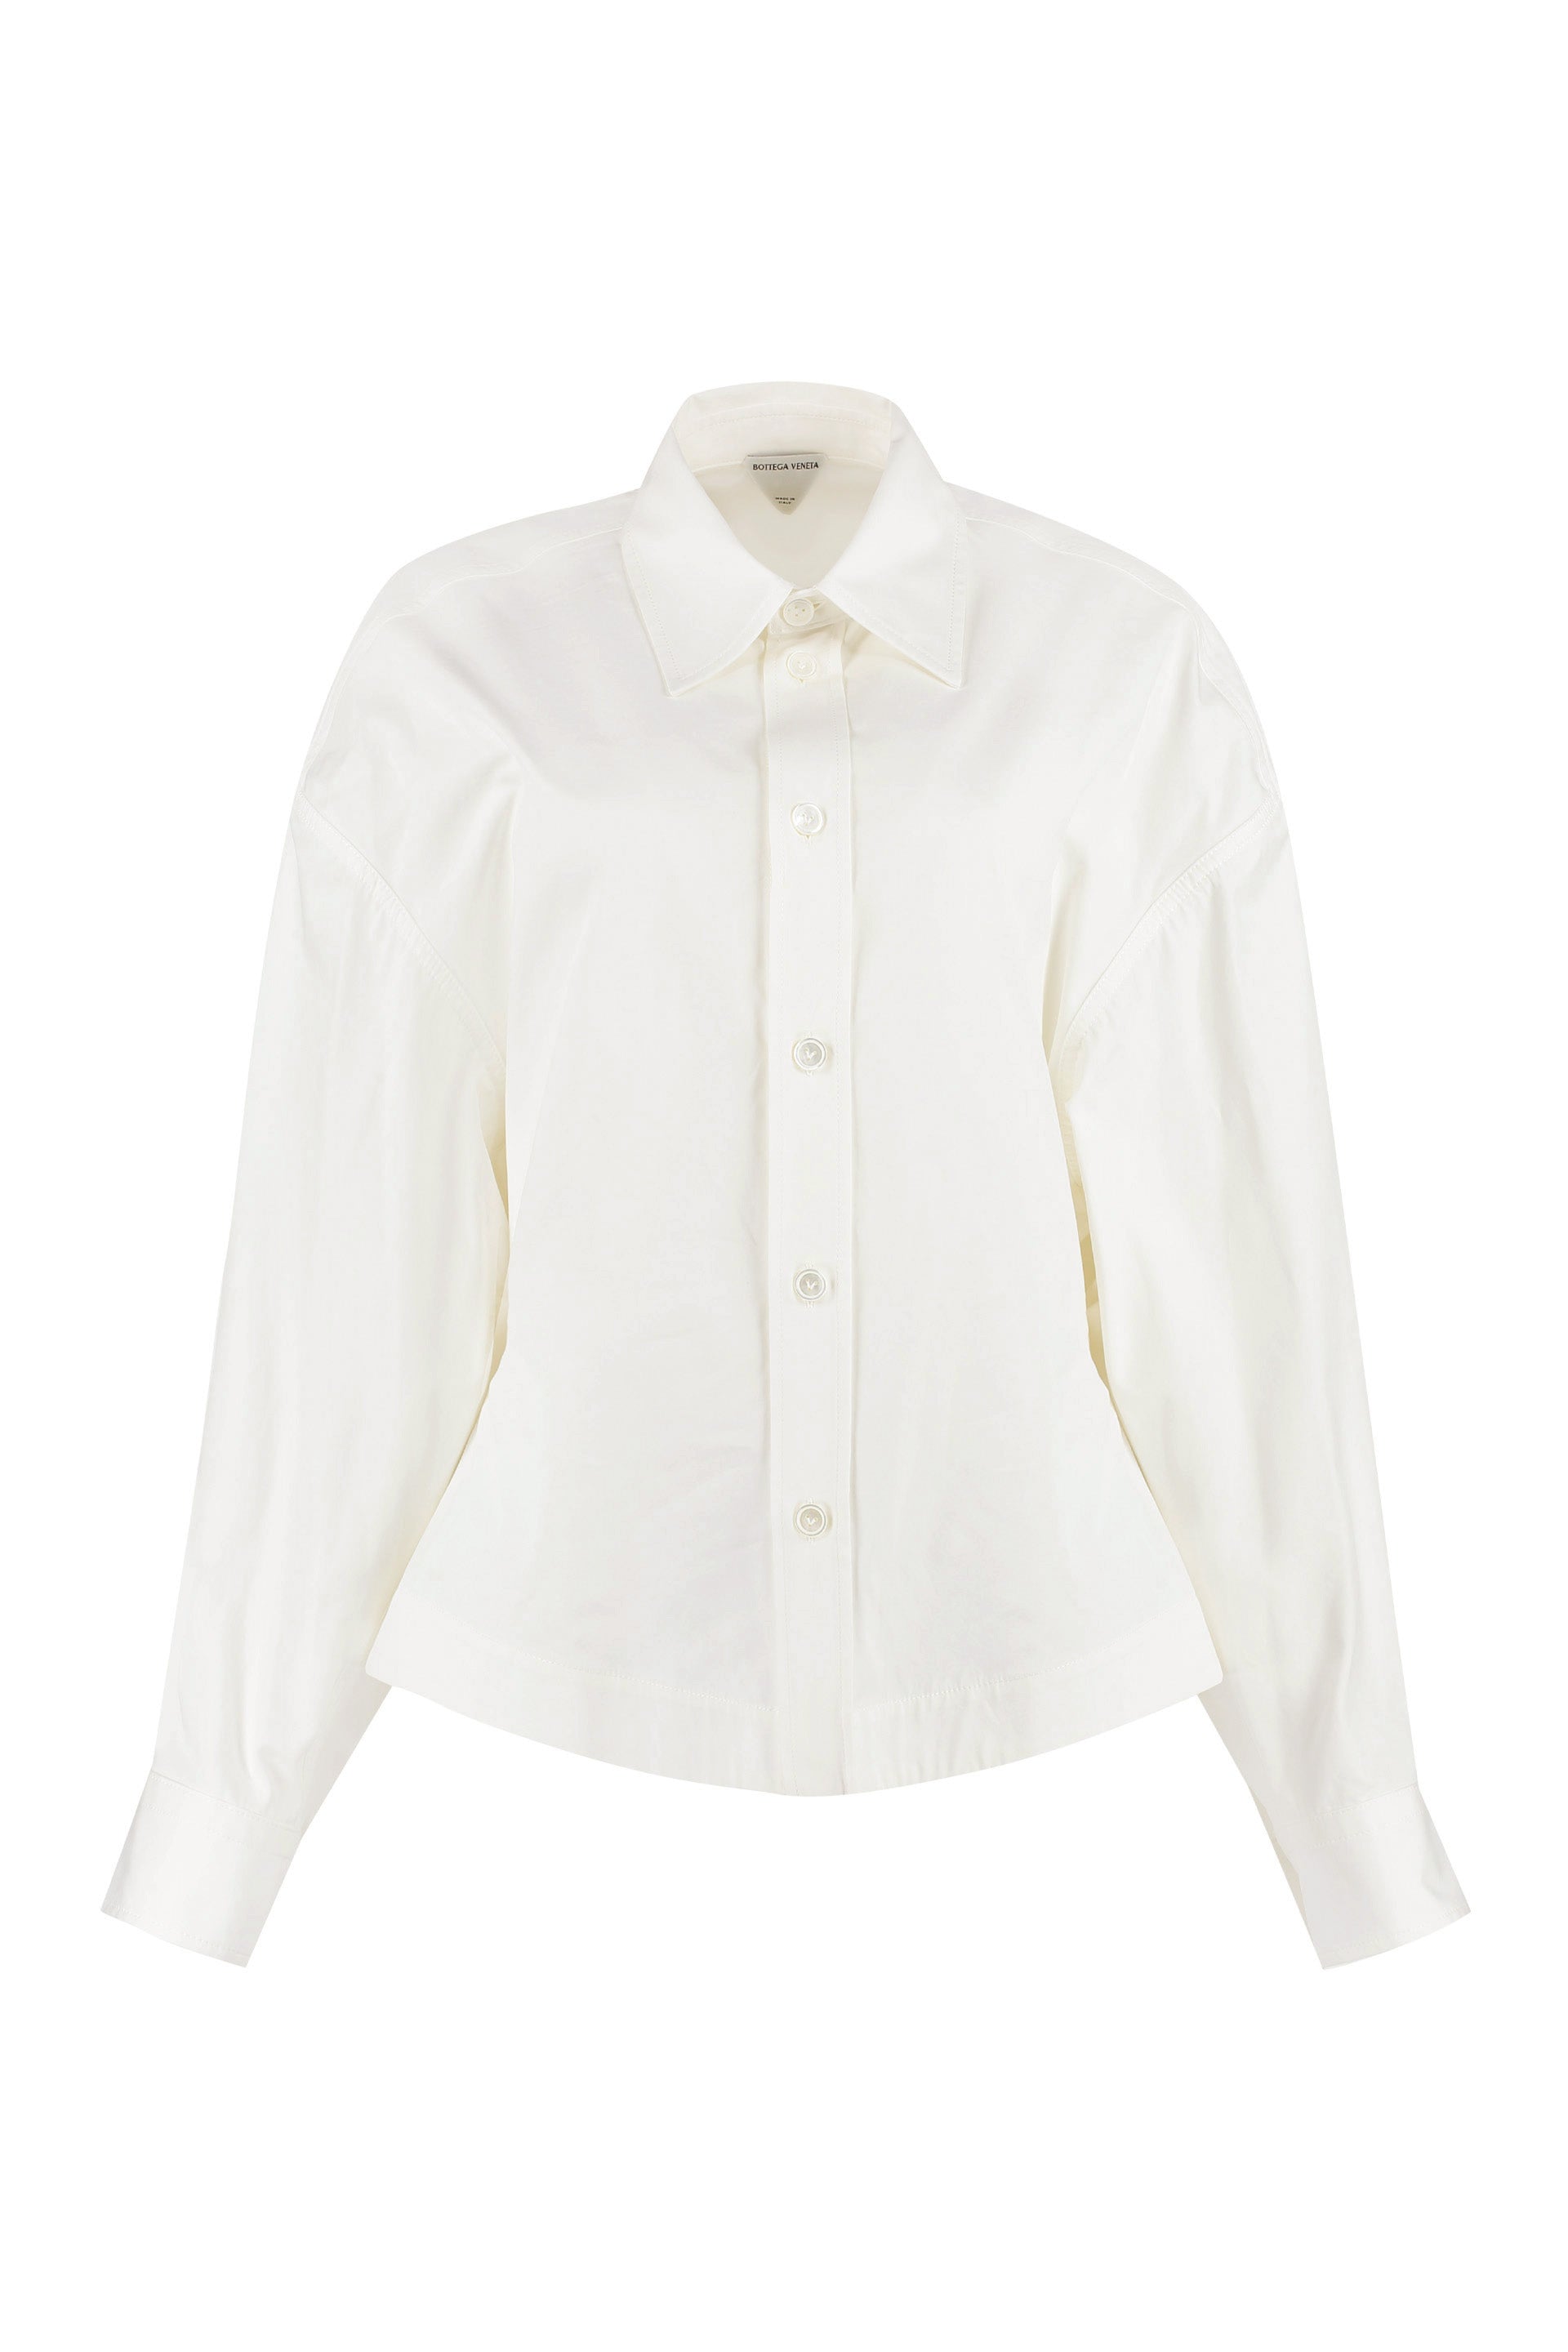 Shop Bottega Veneta Casual And Chic Long Sleeve Shirt For Women In Ivory